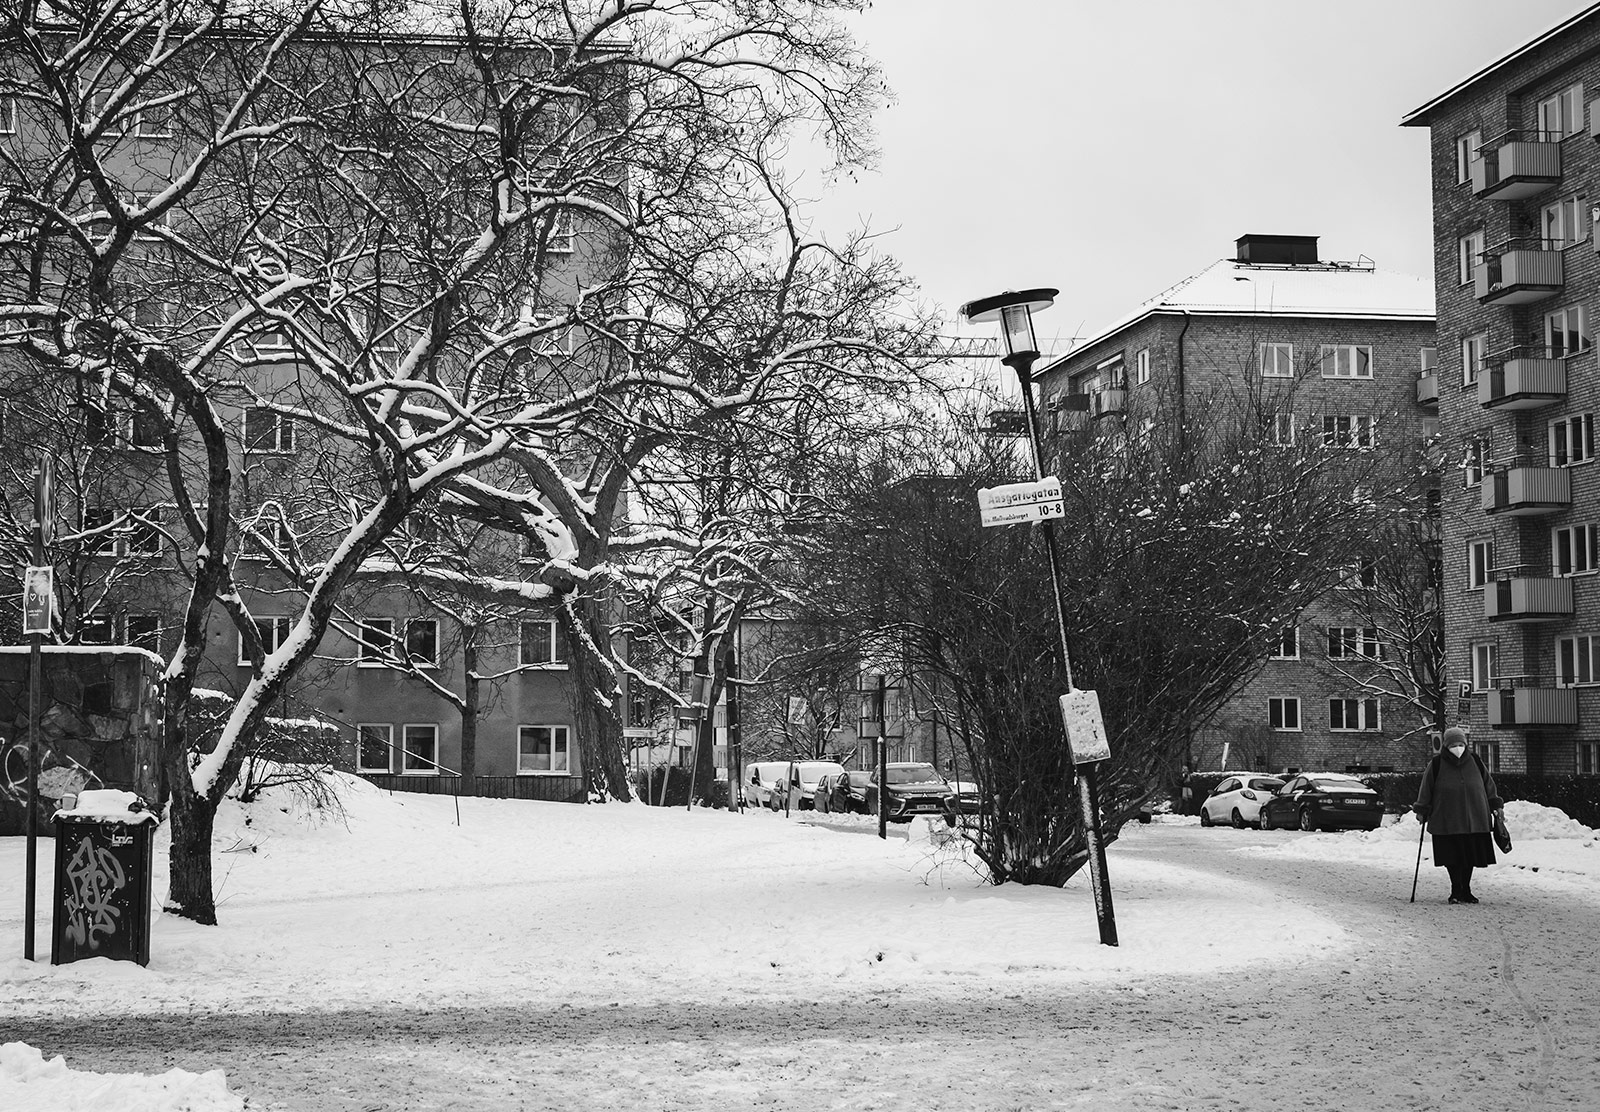 Snow on city trees